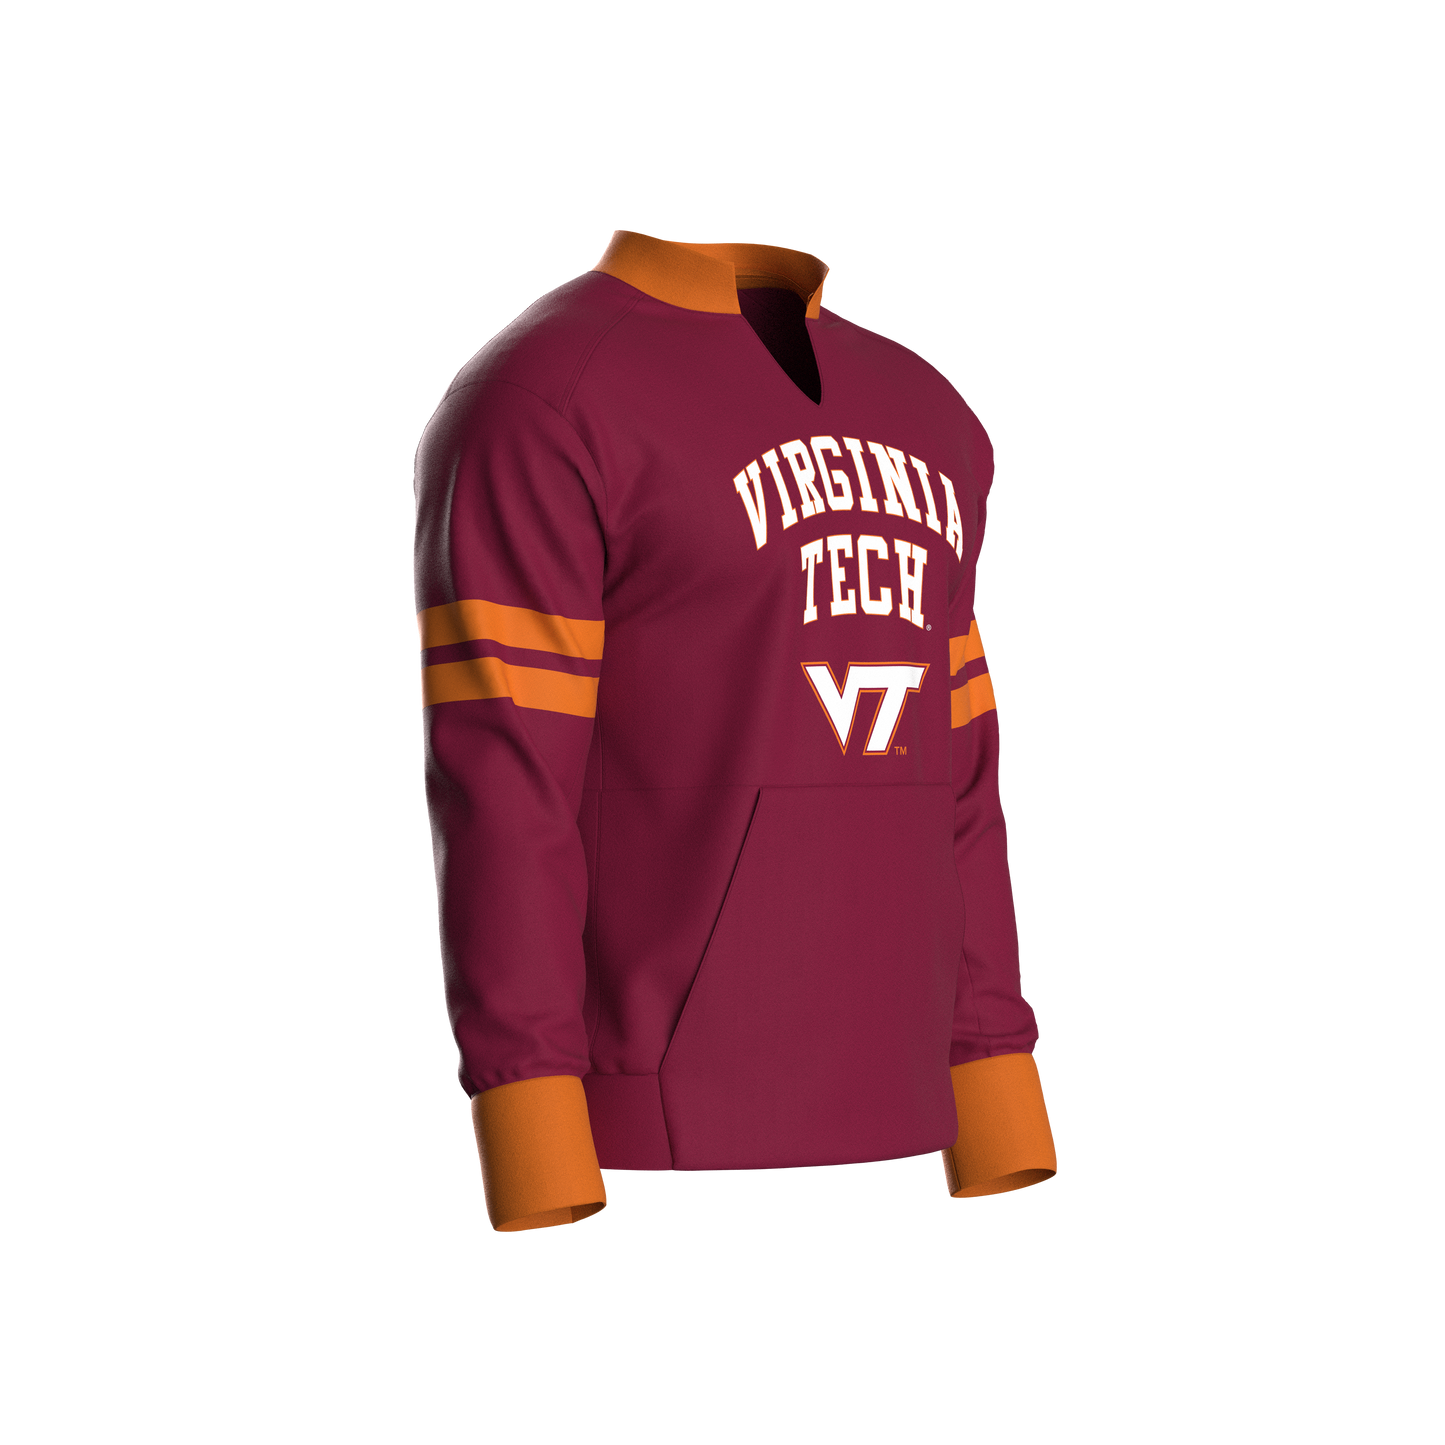 Virginia Tech University Home Pullover (adult)